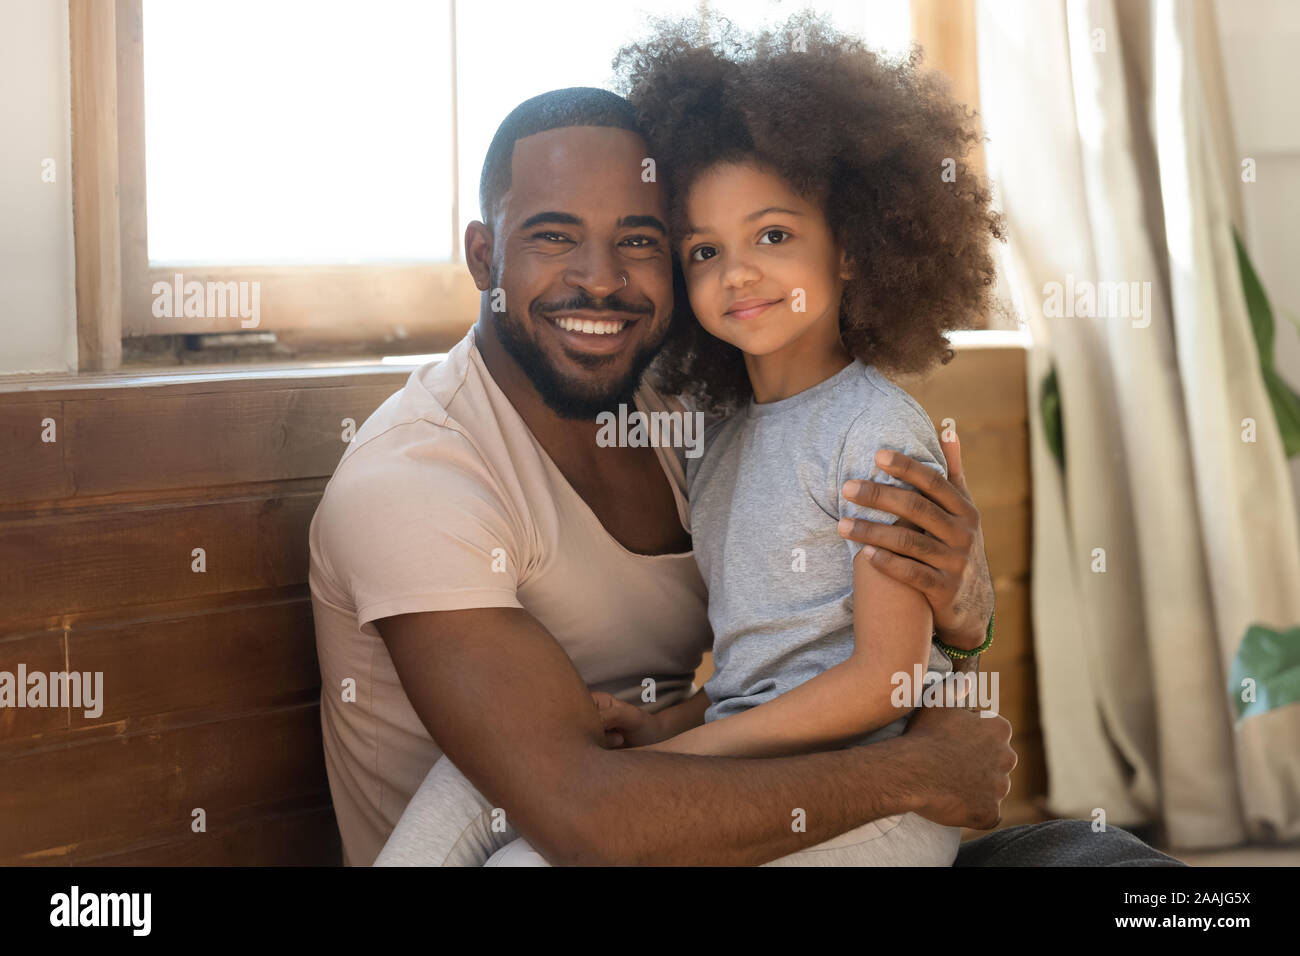 Smiling biracial dad and preschooler daughter hug looking at camera Stock Photo